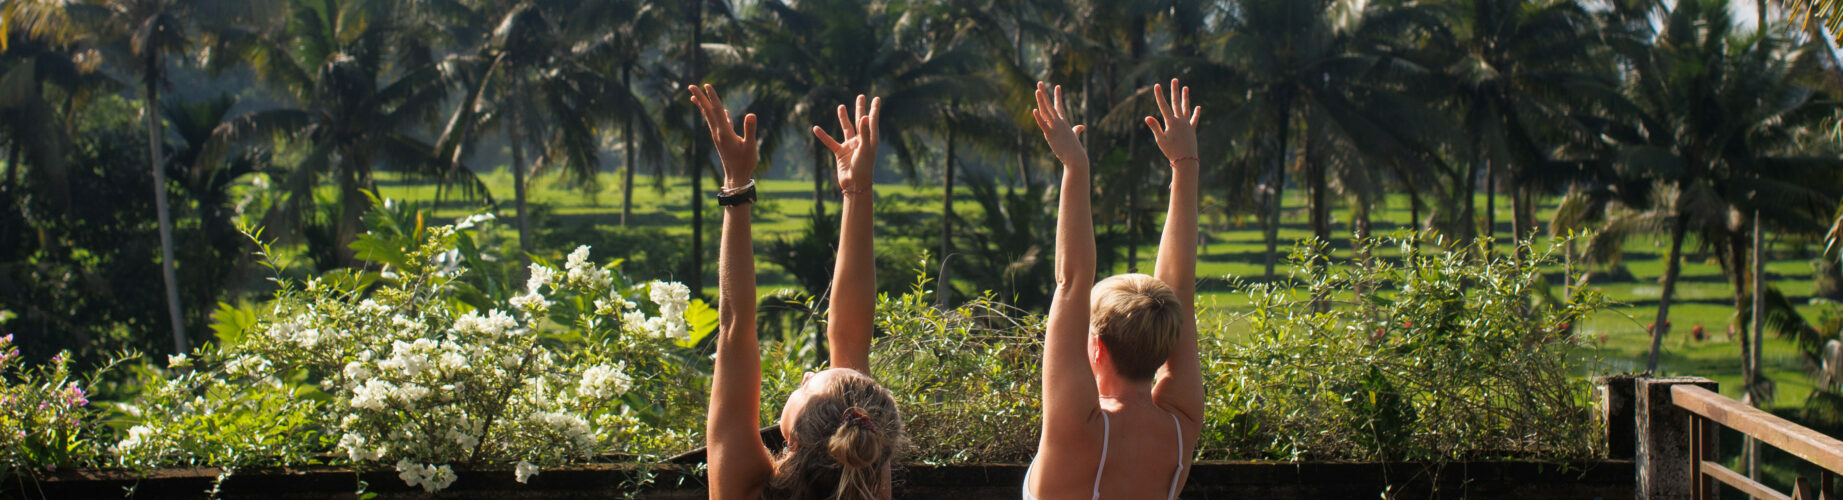 bali adventure yogi holiday retreat